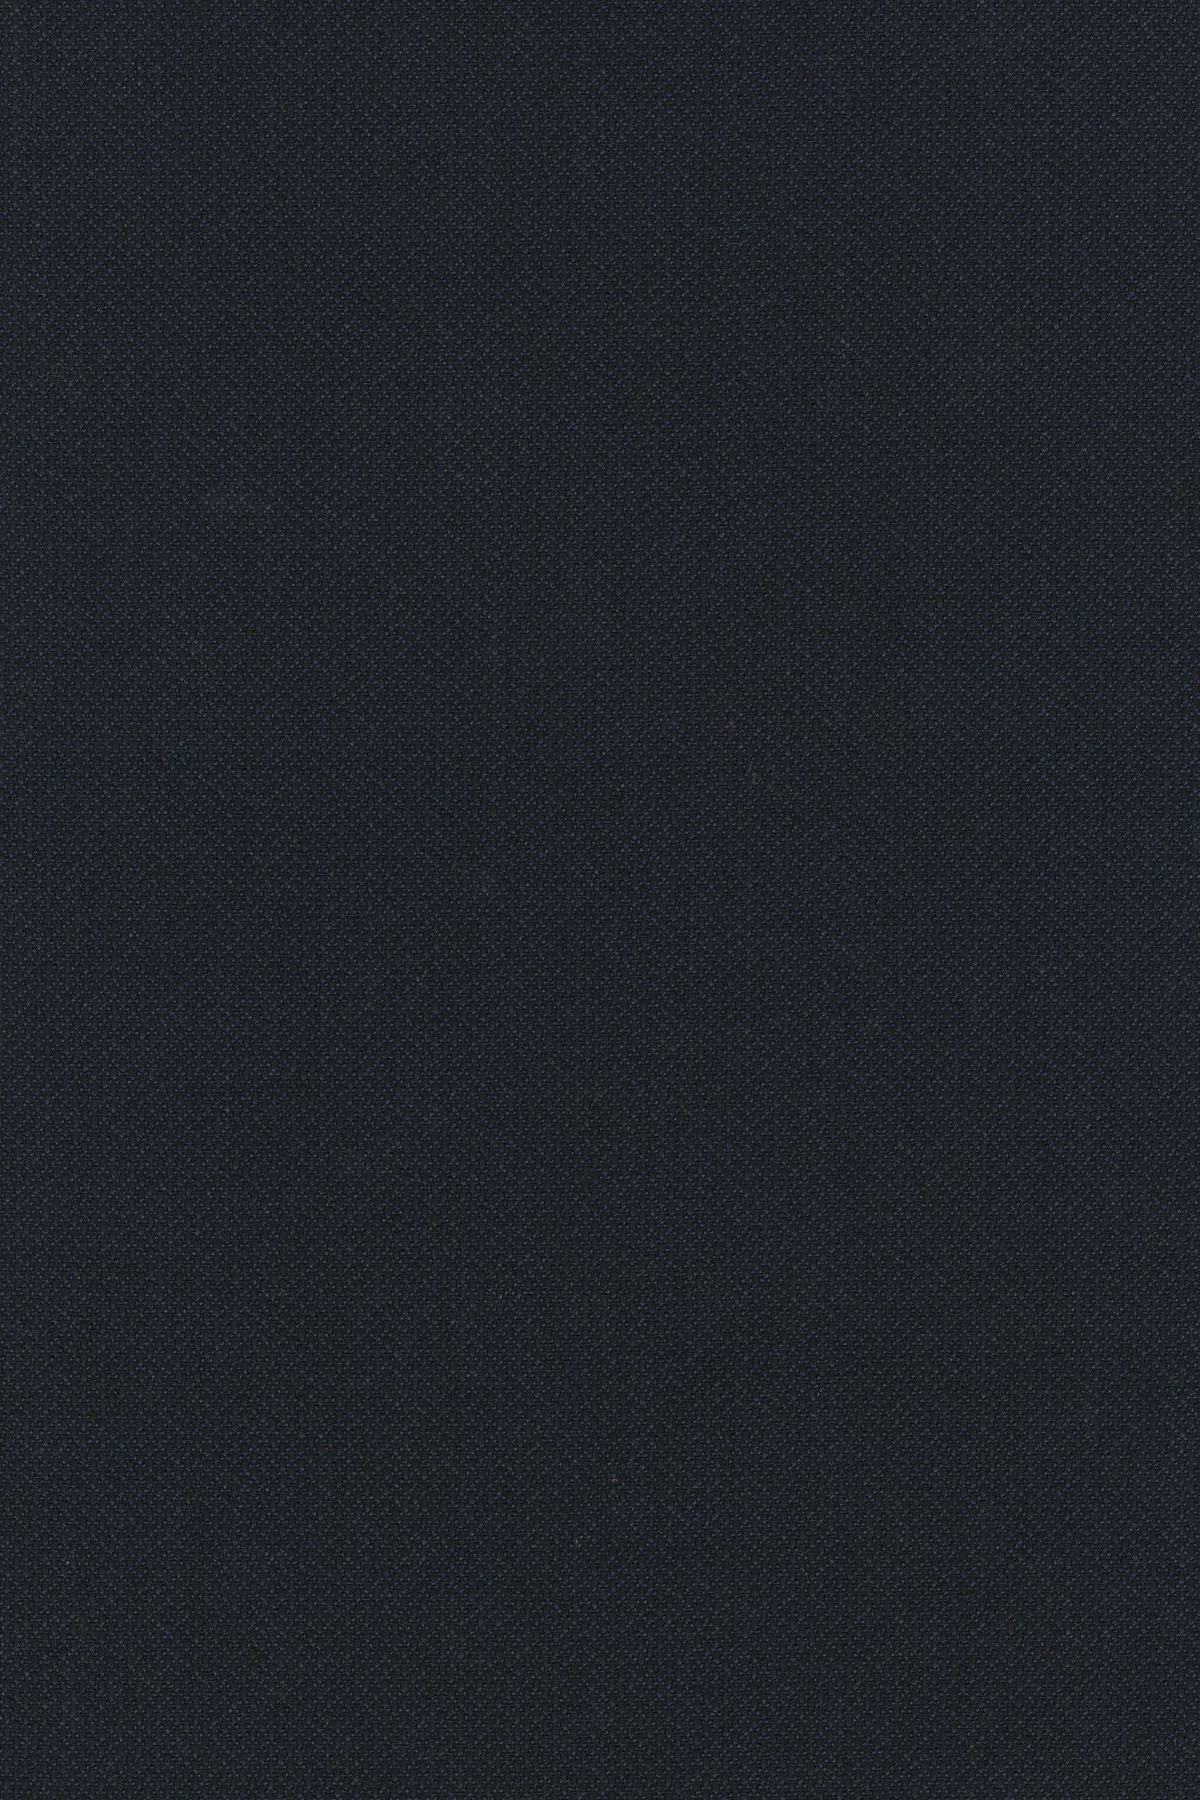 Fabric sample Fiord black